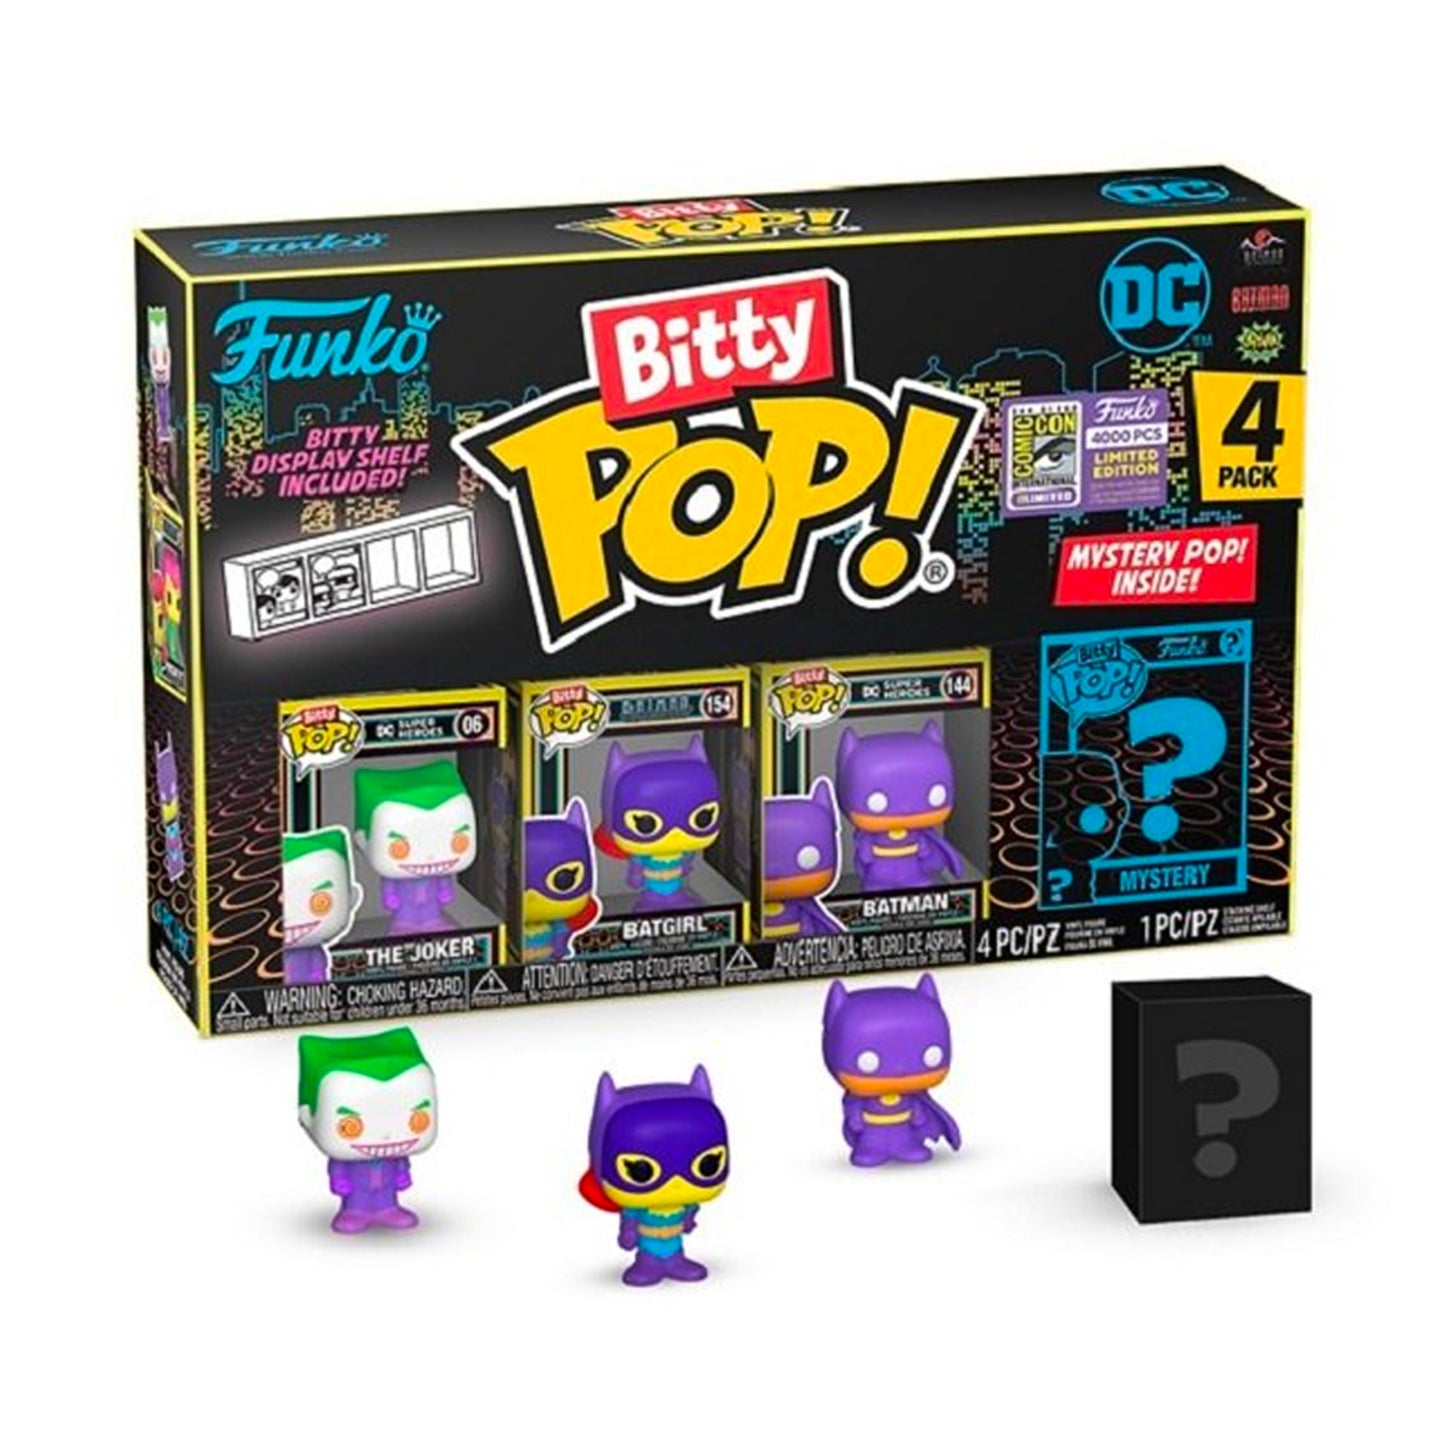 Funko: Bitty Pop! DC Comics 4-Pack Series 2 (Black Light) Blind Box